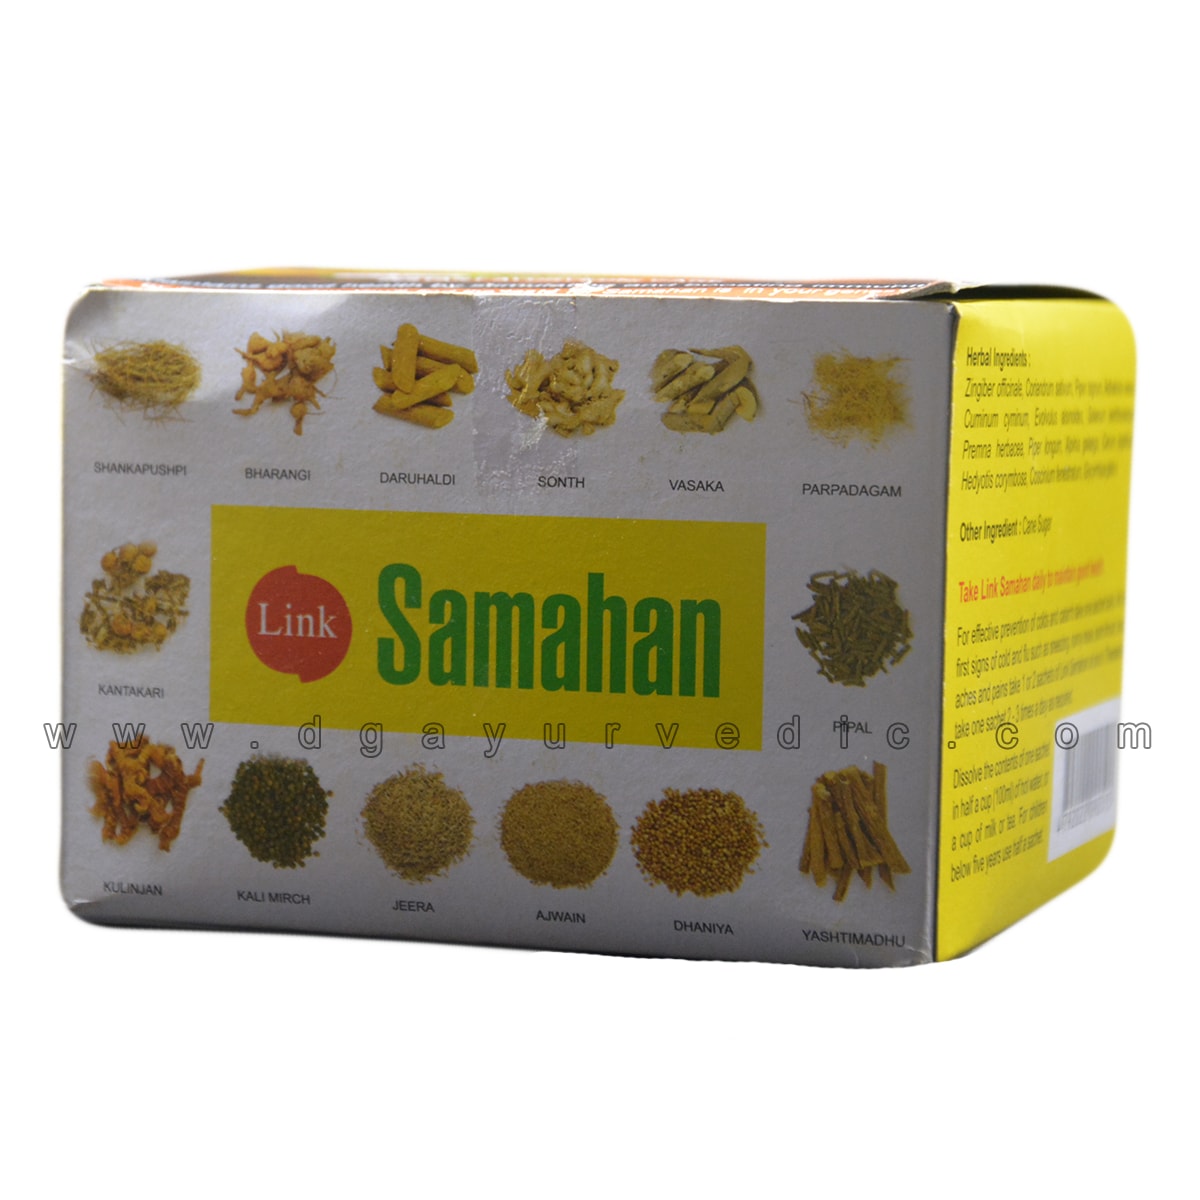 SAMAHAN Ayurvedic Herbal Tea 50 sachets